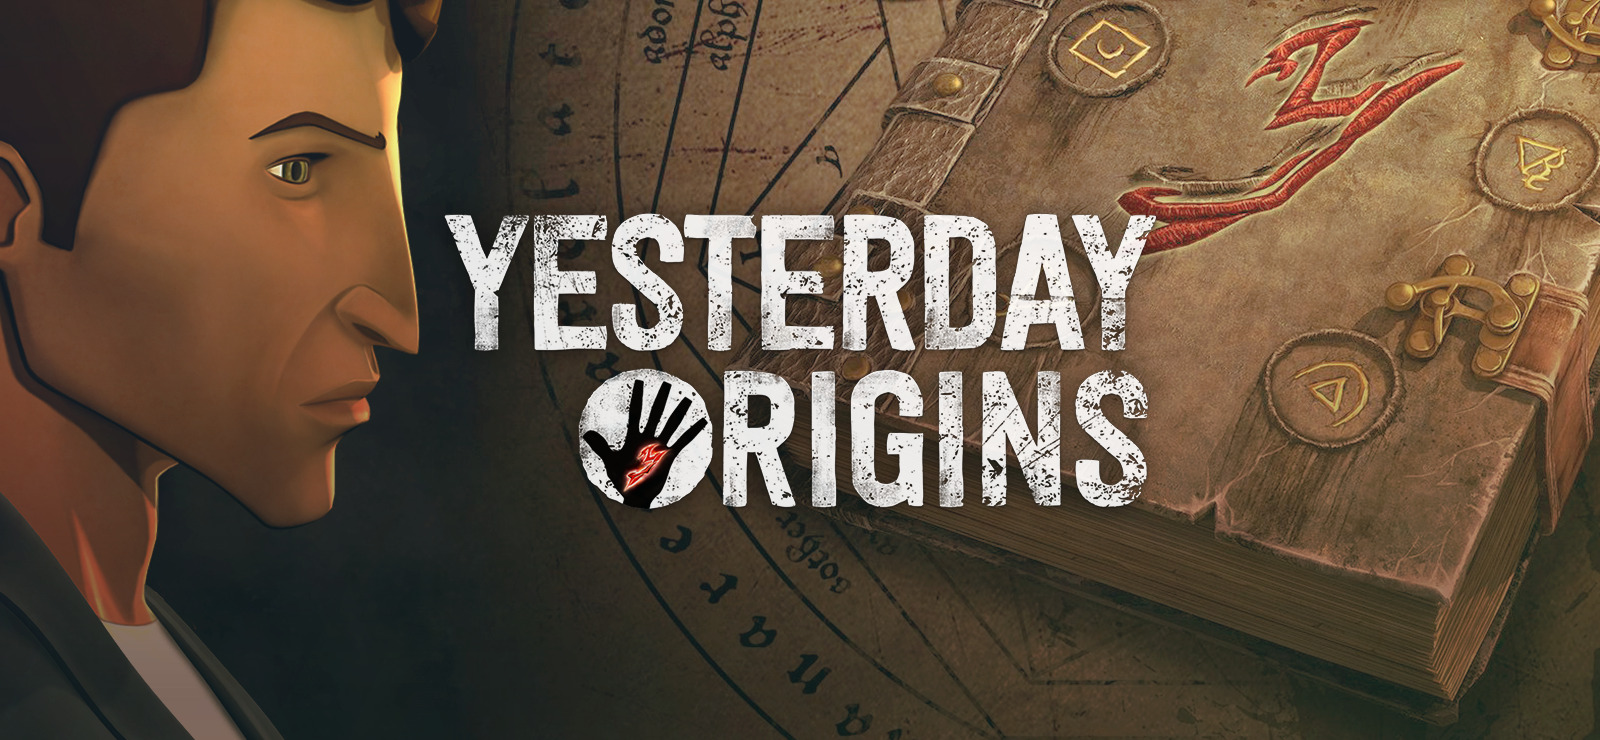 They play games yesterday. Yesterday Origins. Игра yesterday Origins. Xbox one yesterday Origins. Xbox one yesterday Origins (русские субтитры).